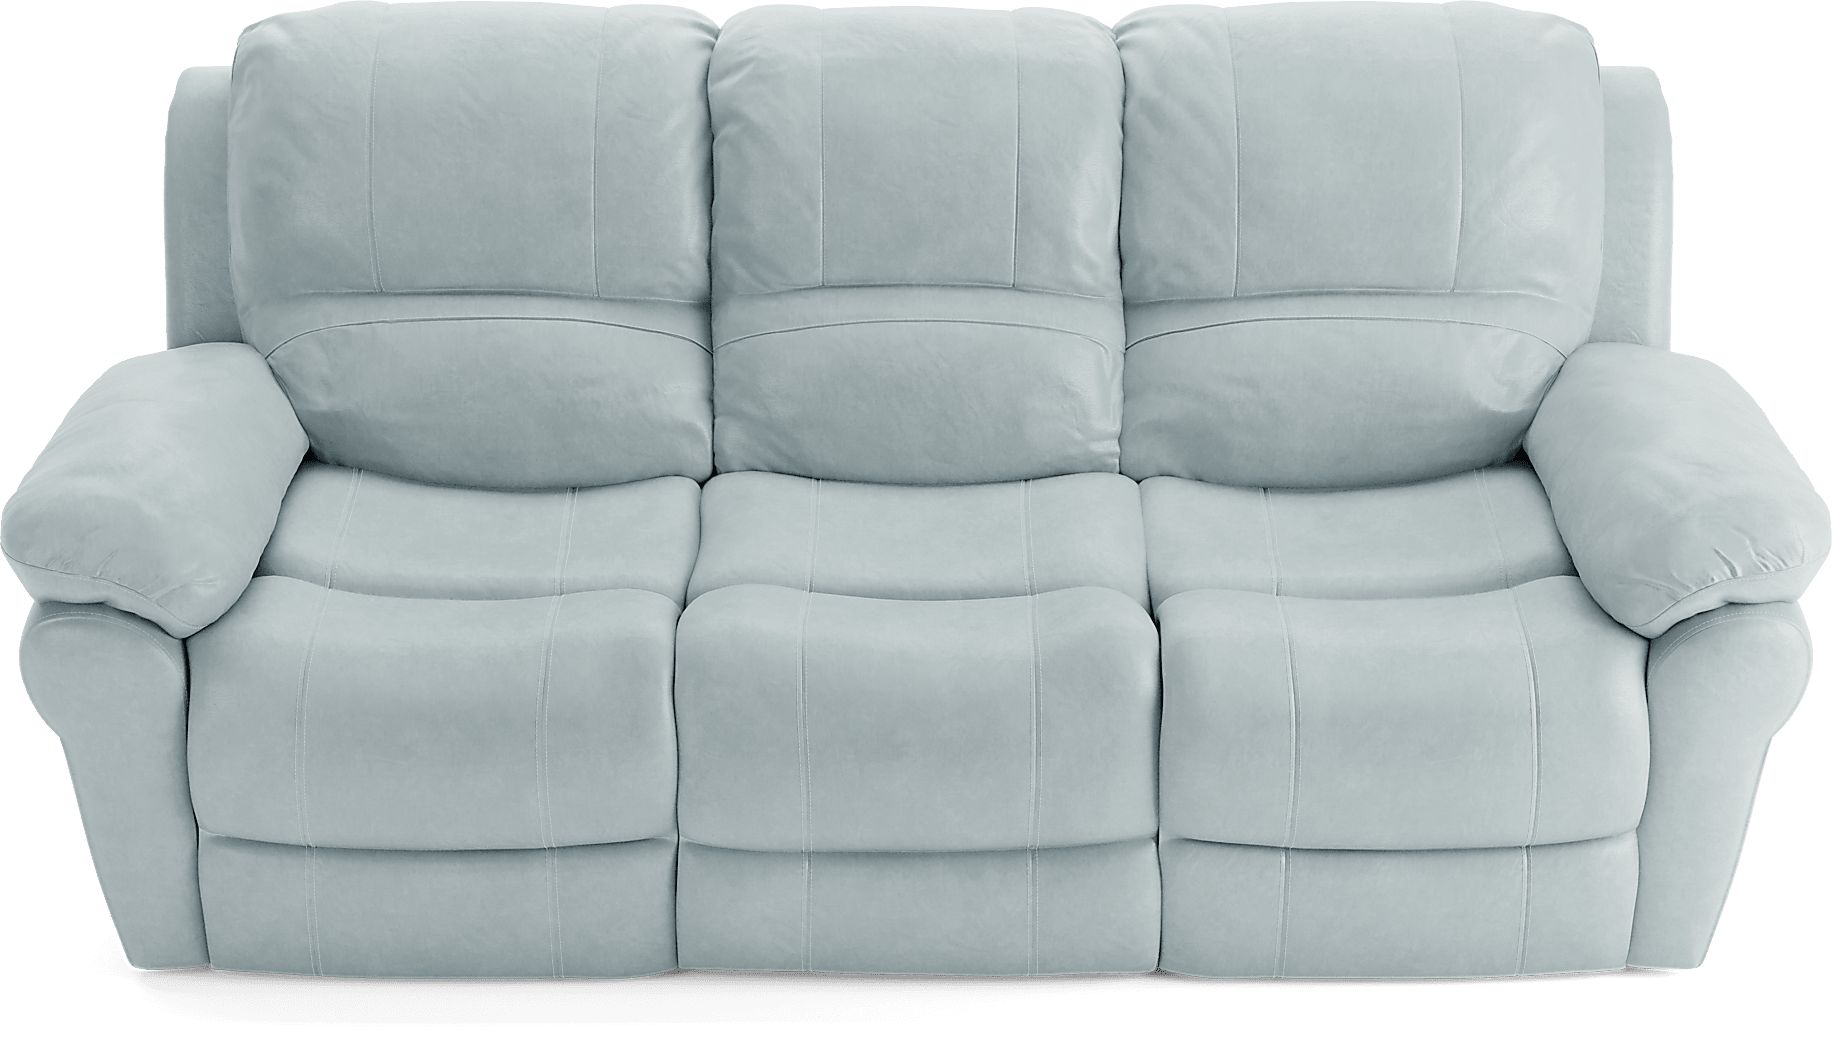 Vercelli Aqua Leather 7 Pc Power Reclining Living Room